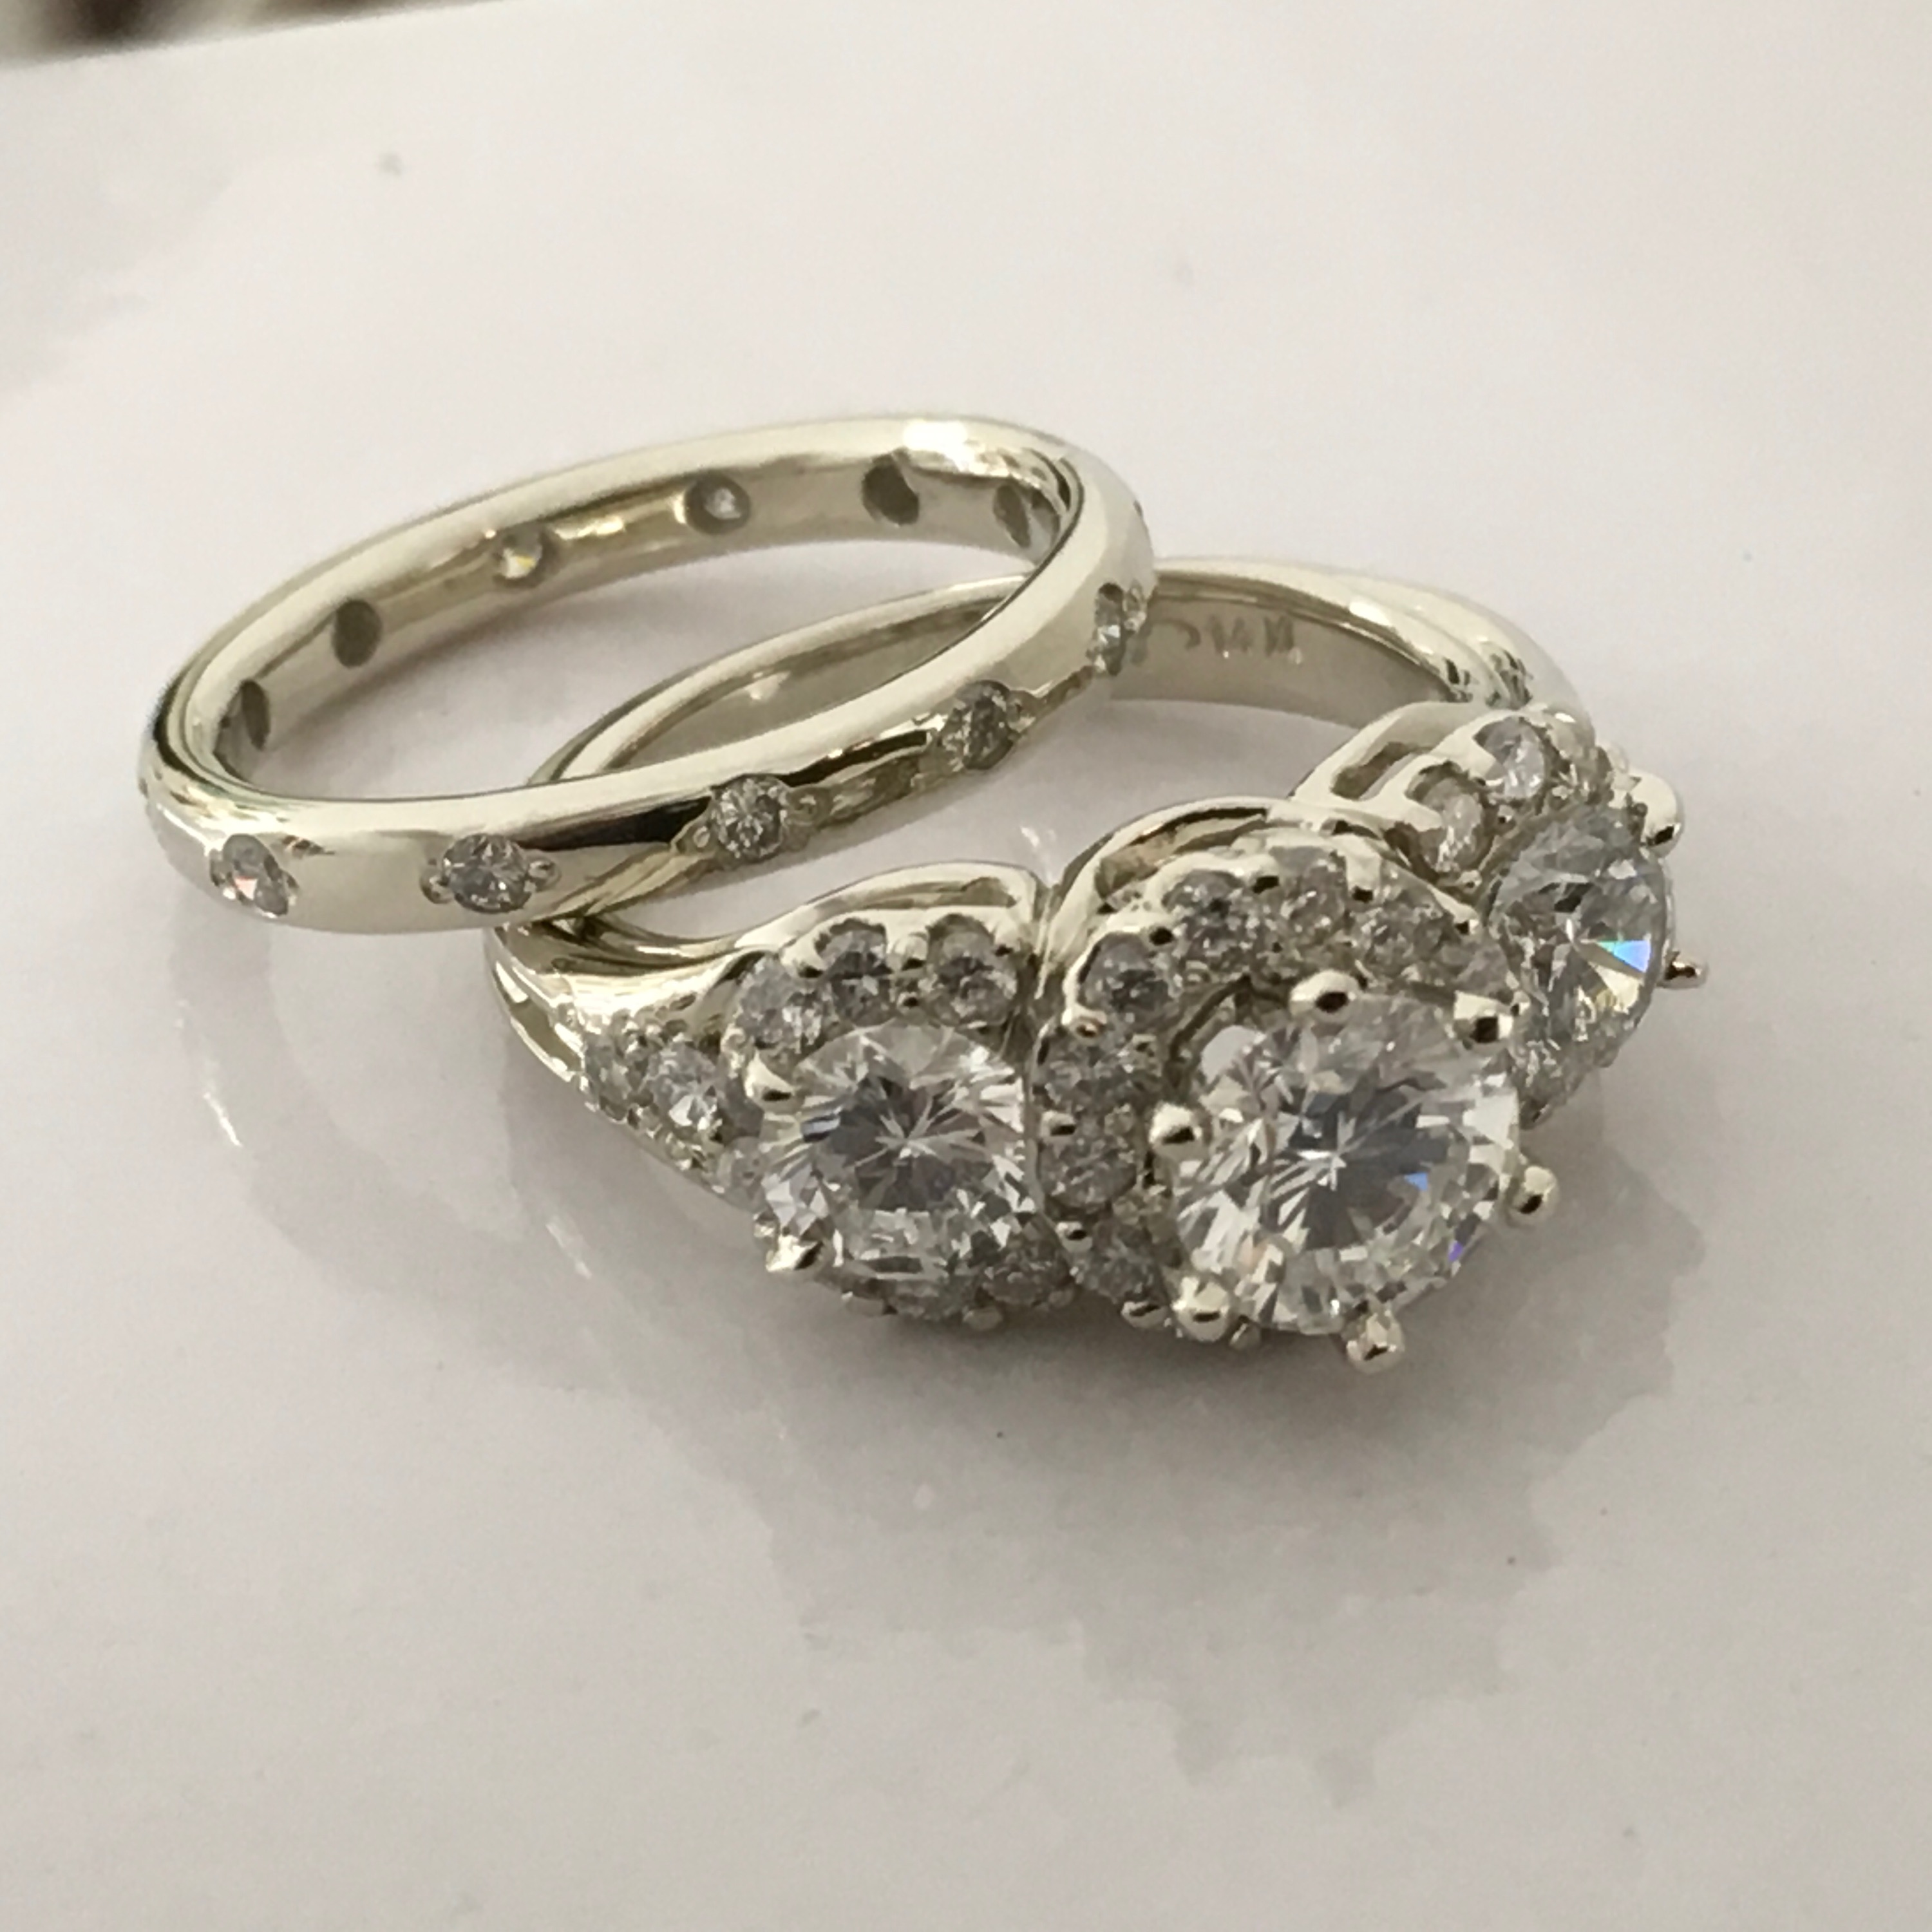 14 Kt White Gold Custom Designed Three Stone Diamond Halo Engagement Ring With Diamond Wedding Band Set With Diamonds All Around